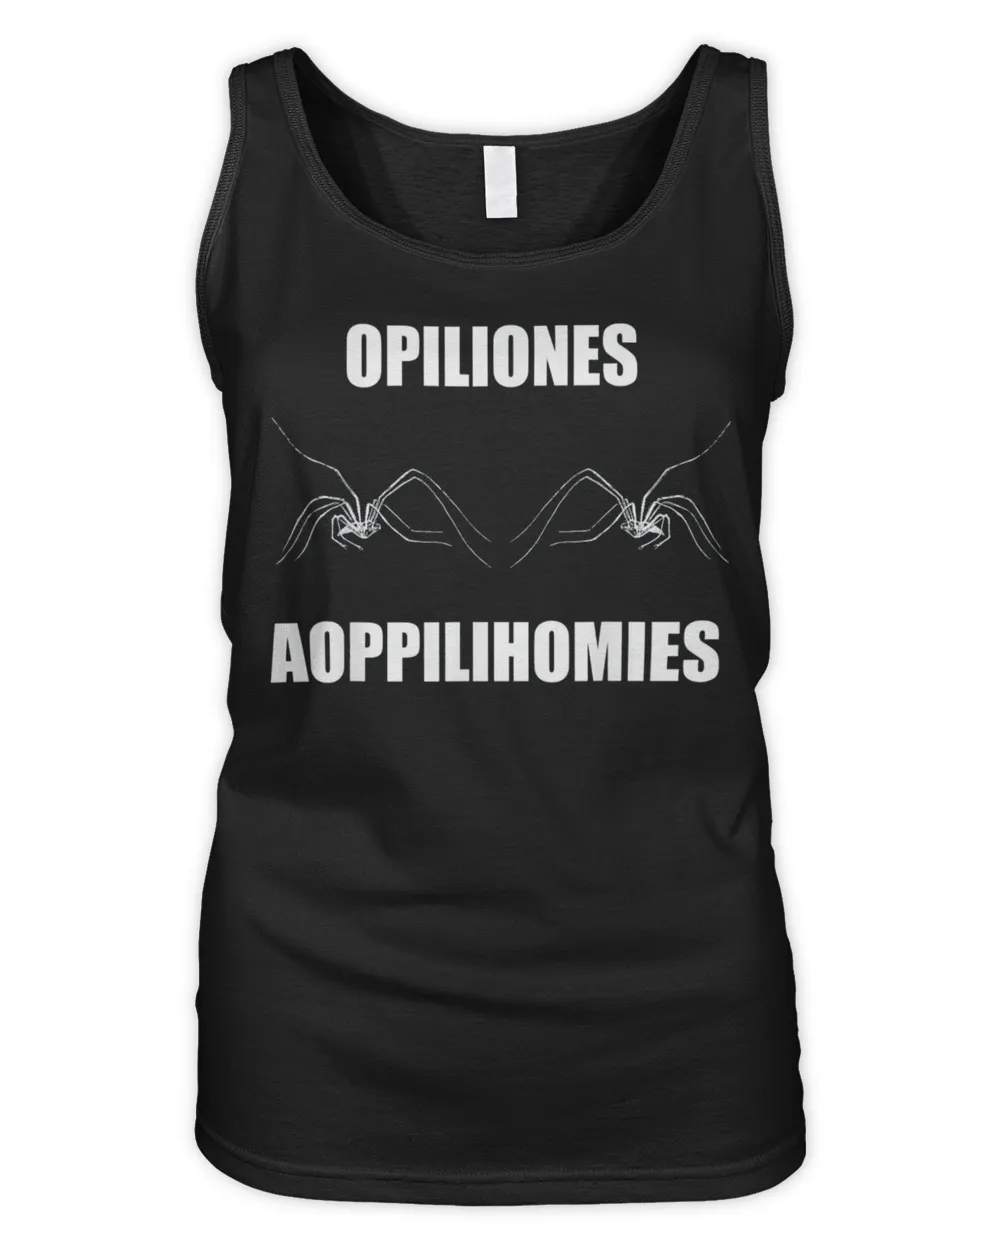 Opiliones aoppilihomies T-Shirt